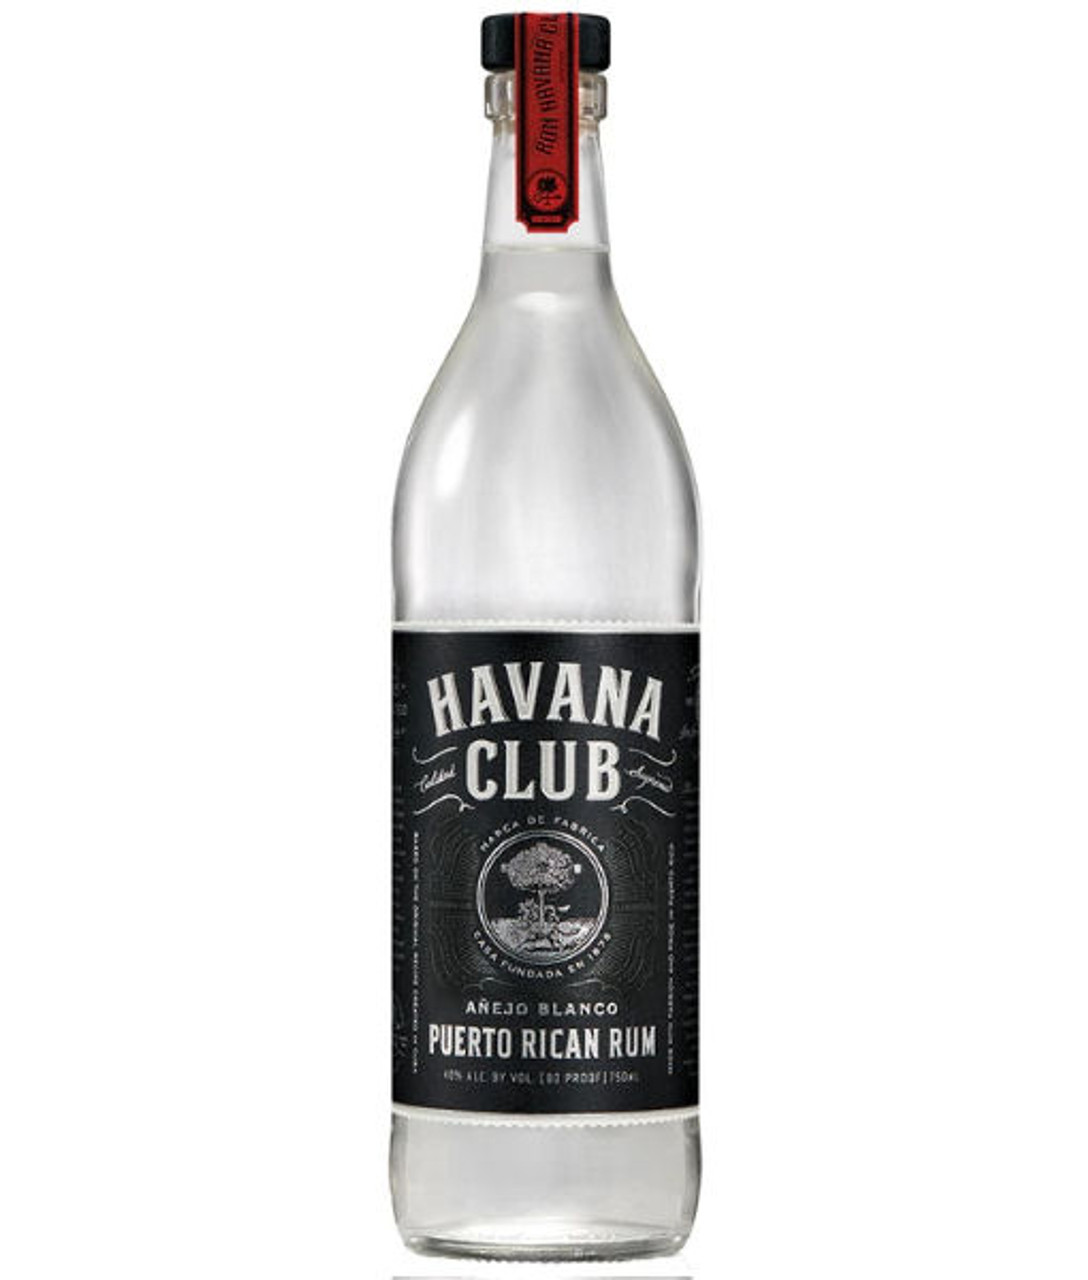 Havana Club Anejo Blanco Puerto Rican Rum 750ml